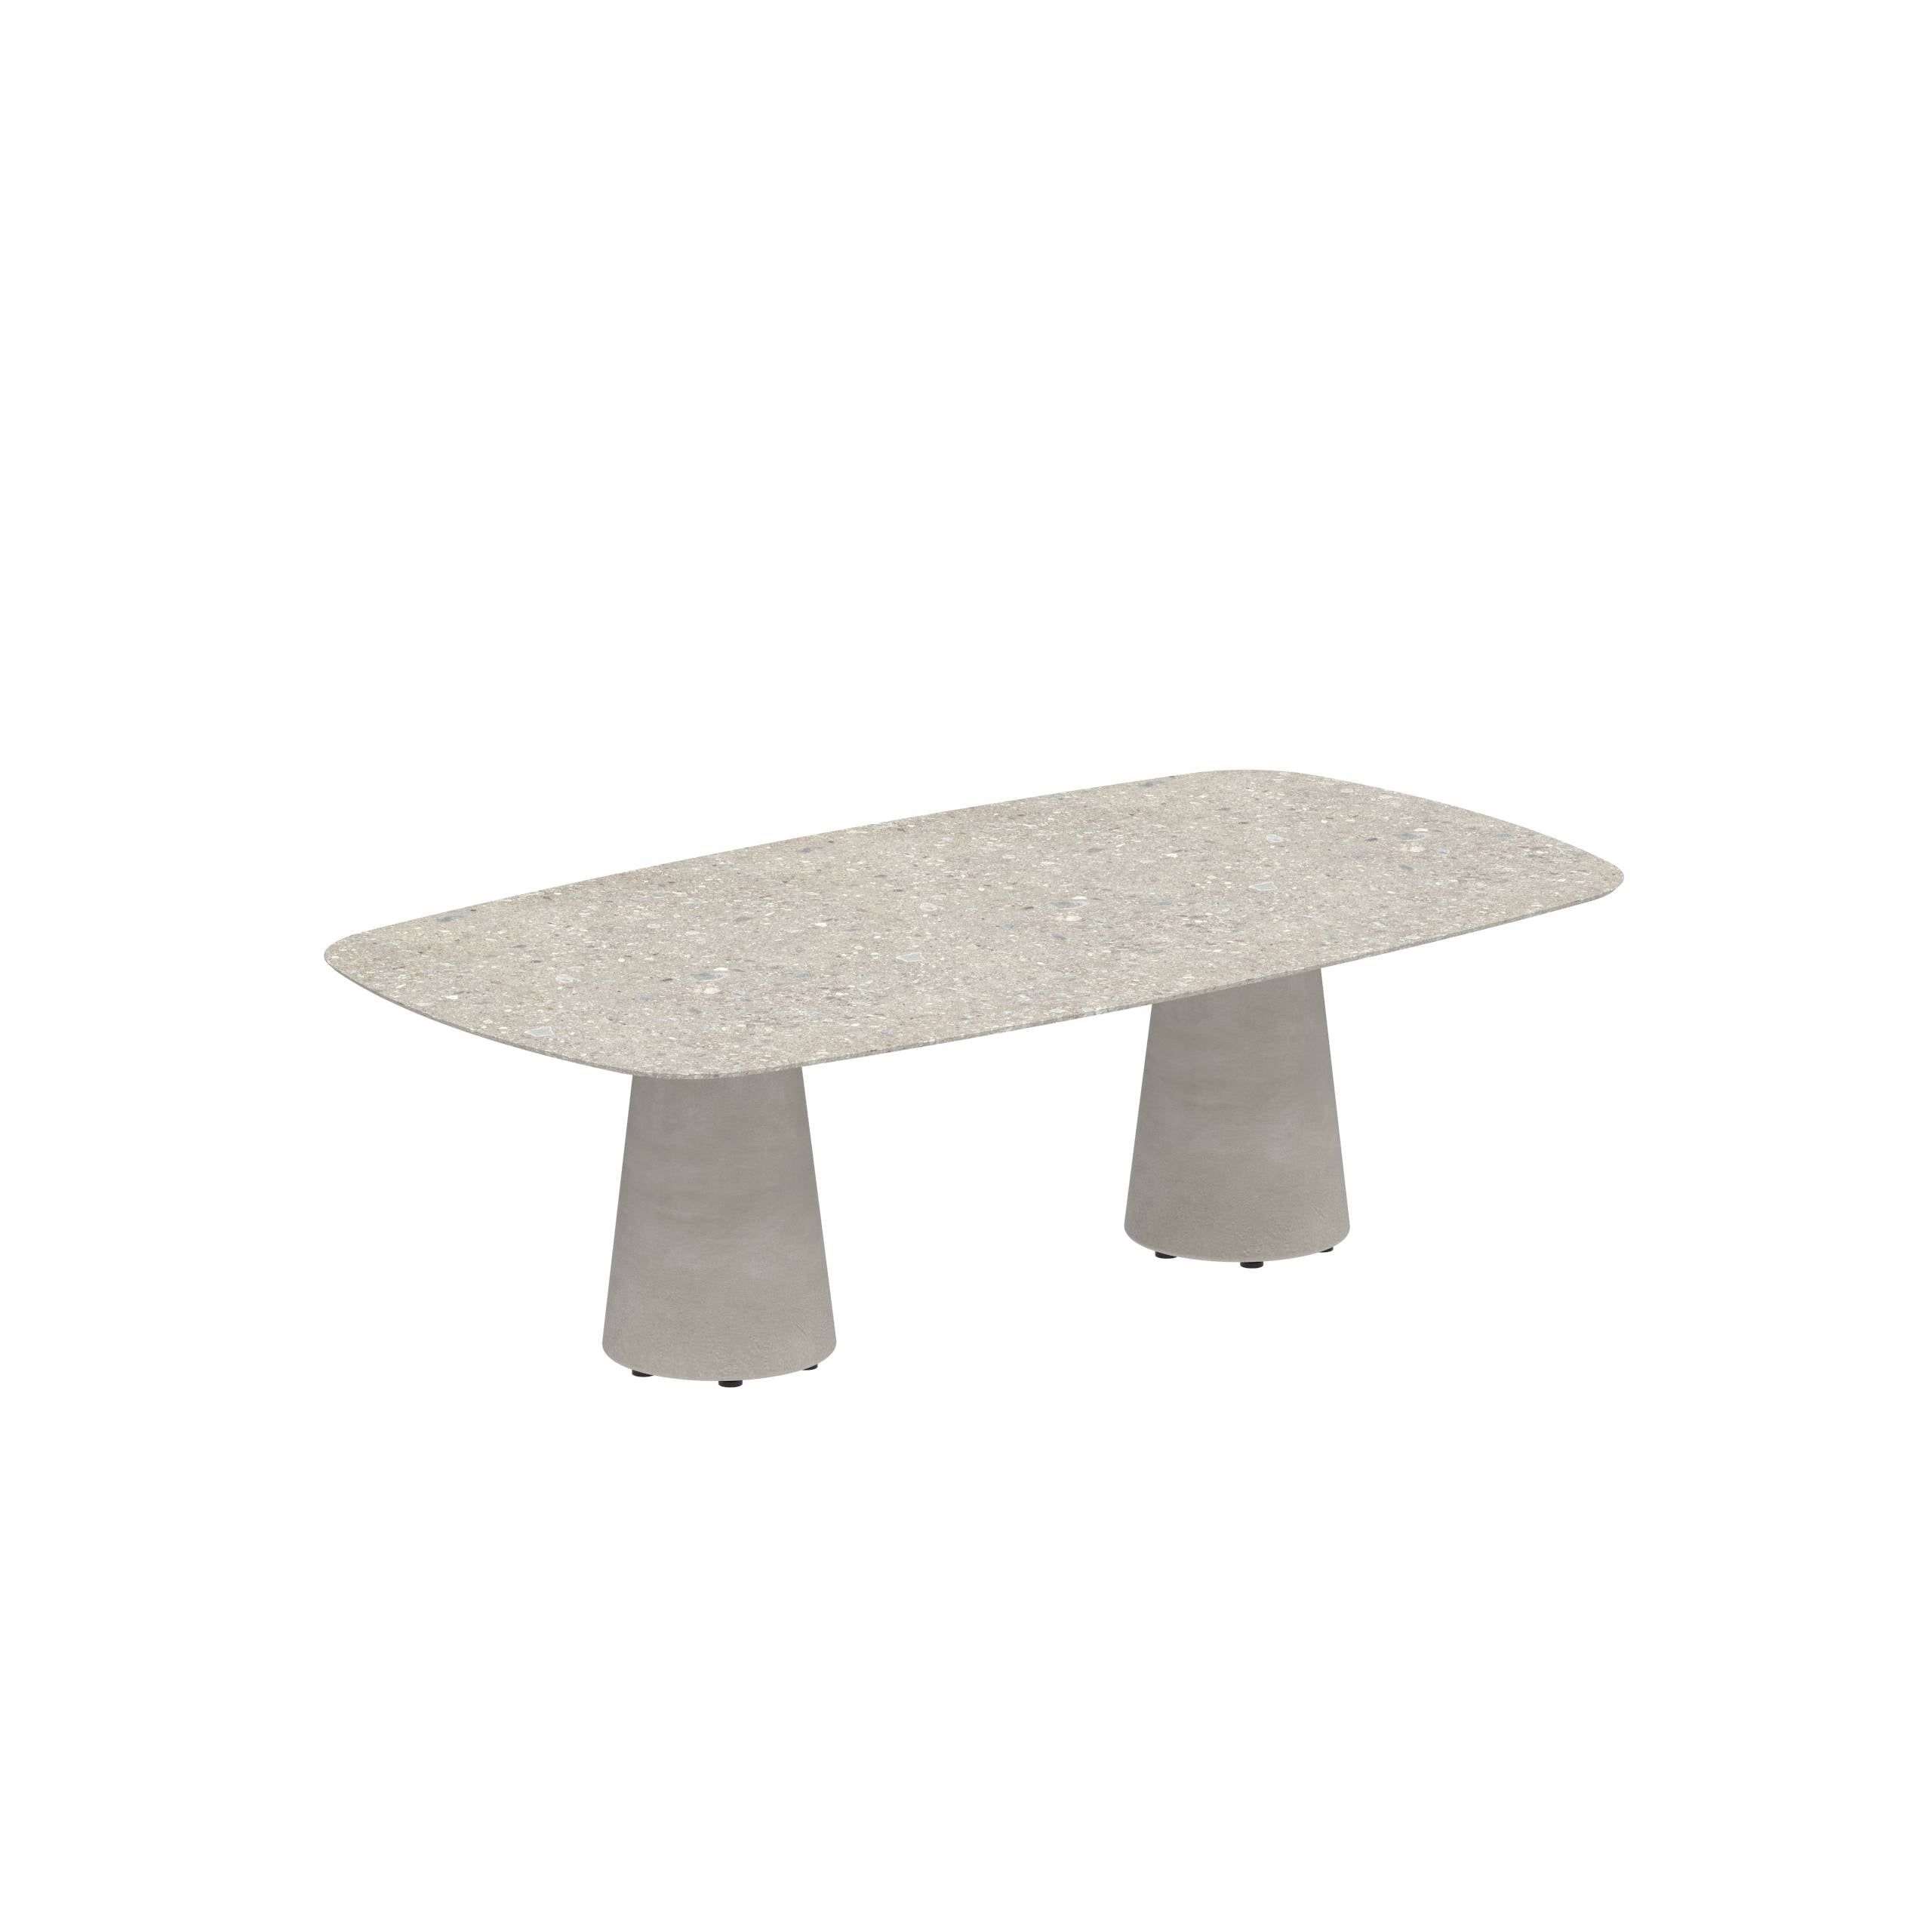 Conix Table 220x120 Cm Low Dining Legs Concrete Cement Grey - Table Top Ceramic Ceppo Dolomitica